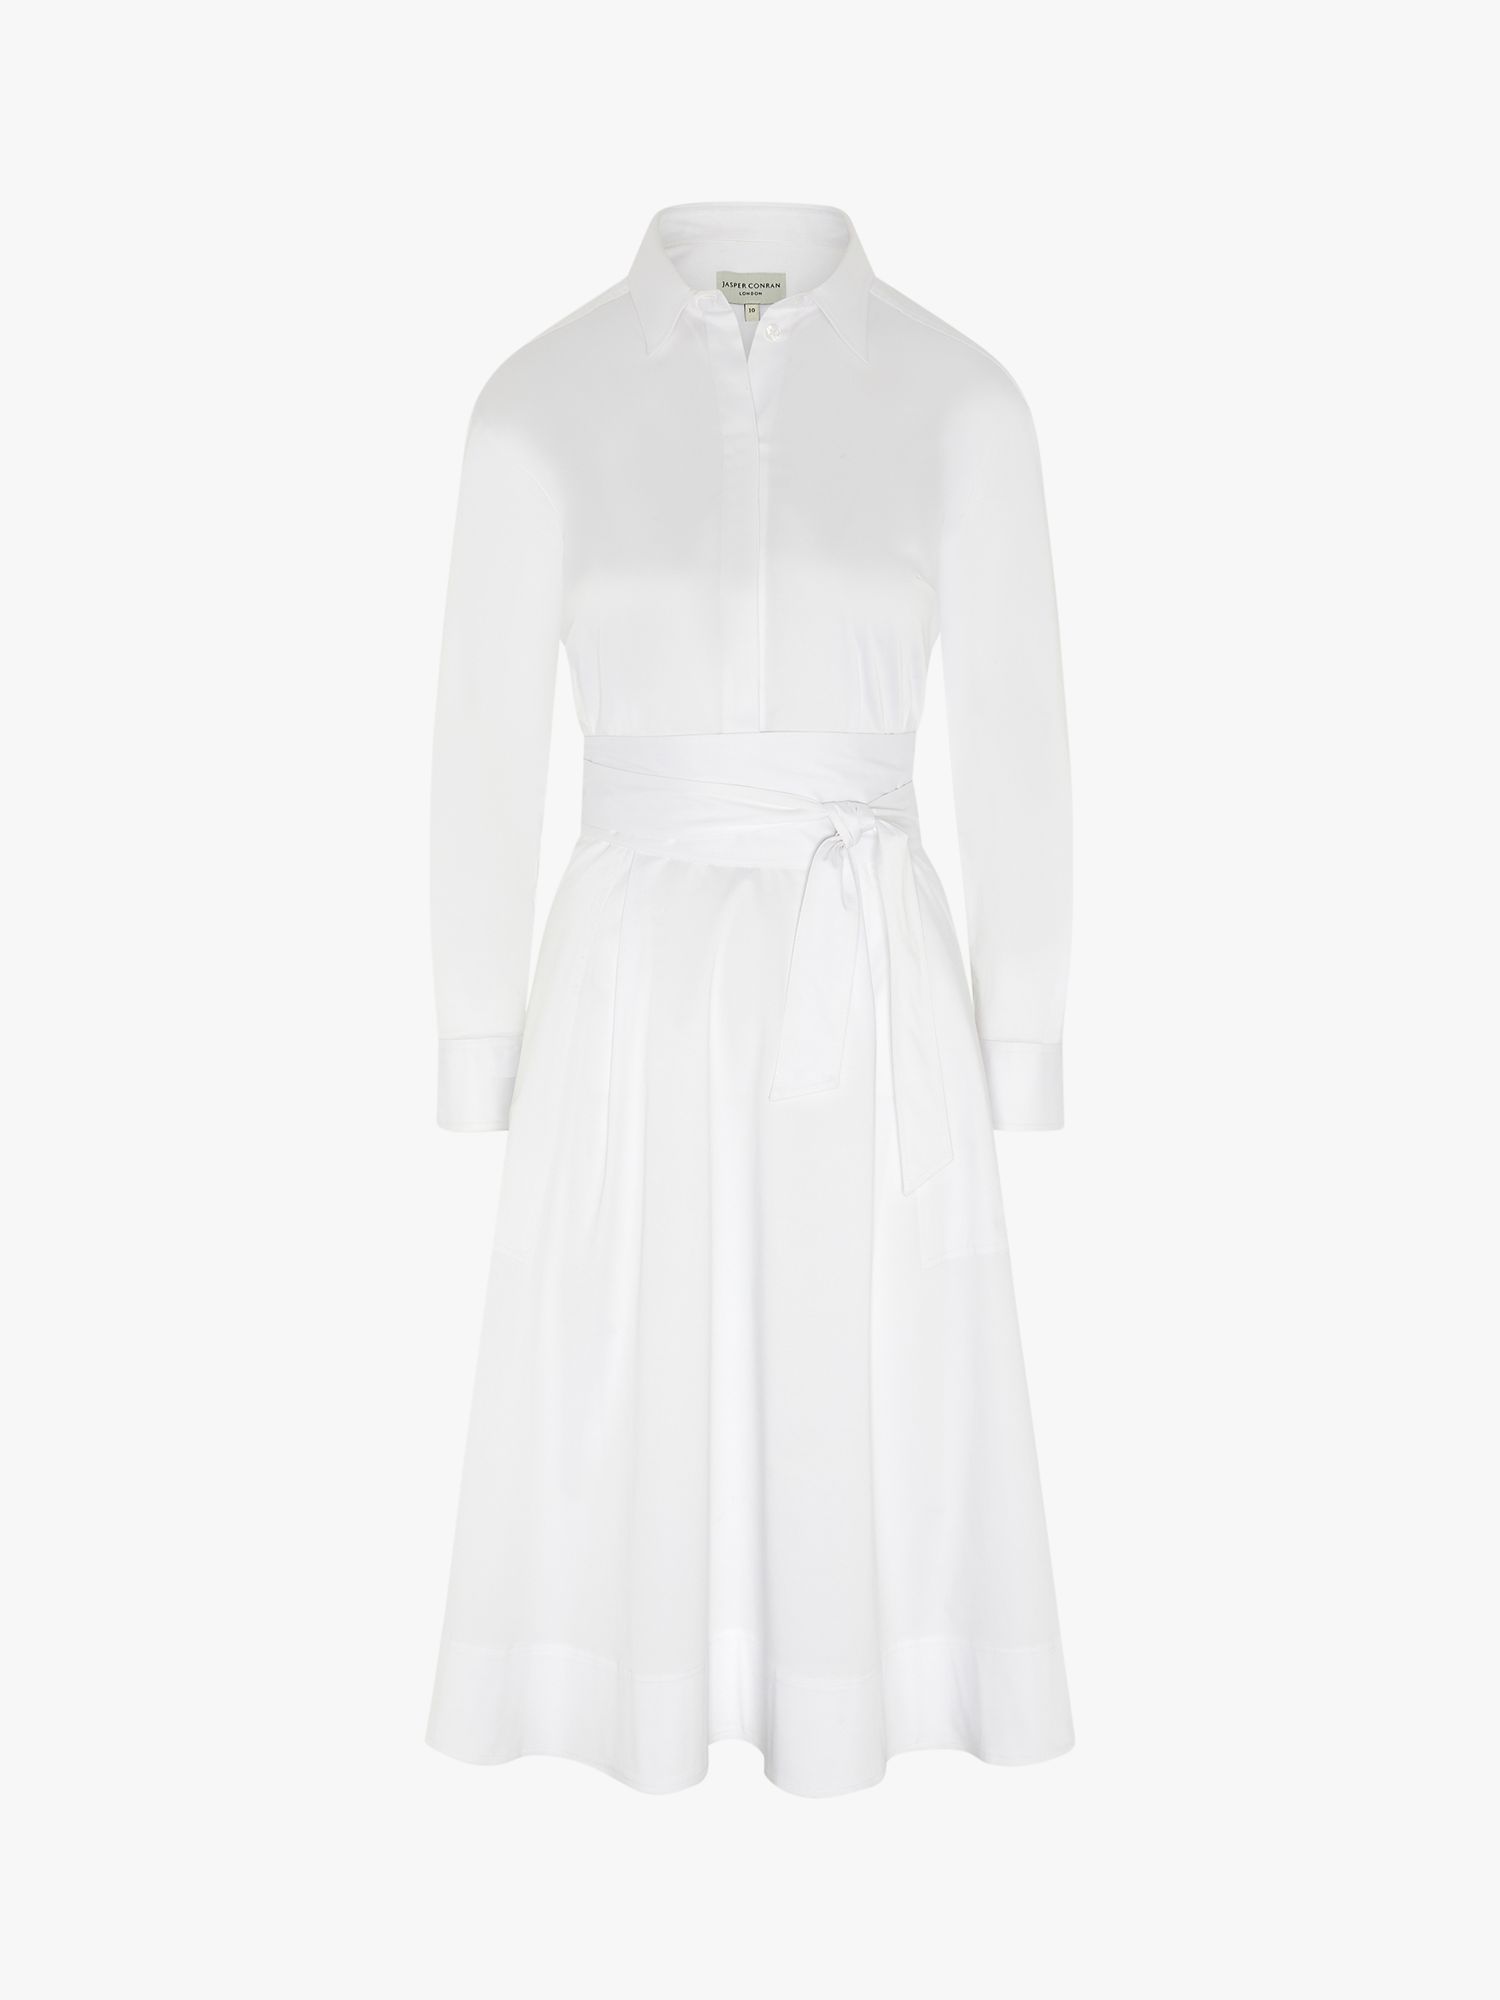 Jasper Conran London Blythe Full Skirt Midi Shirt Dress, White, 8